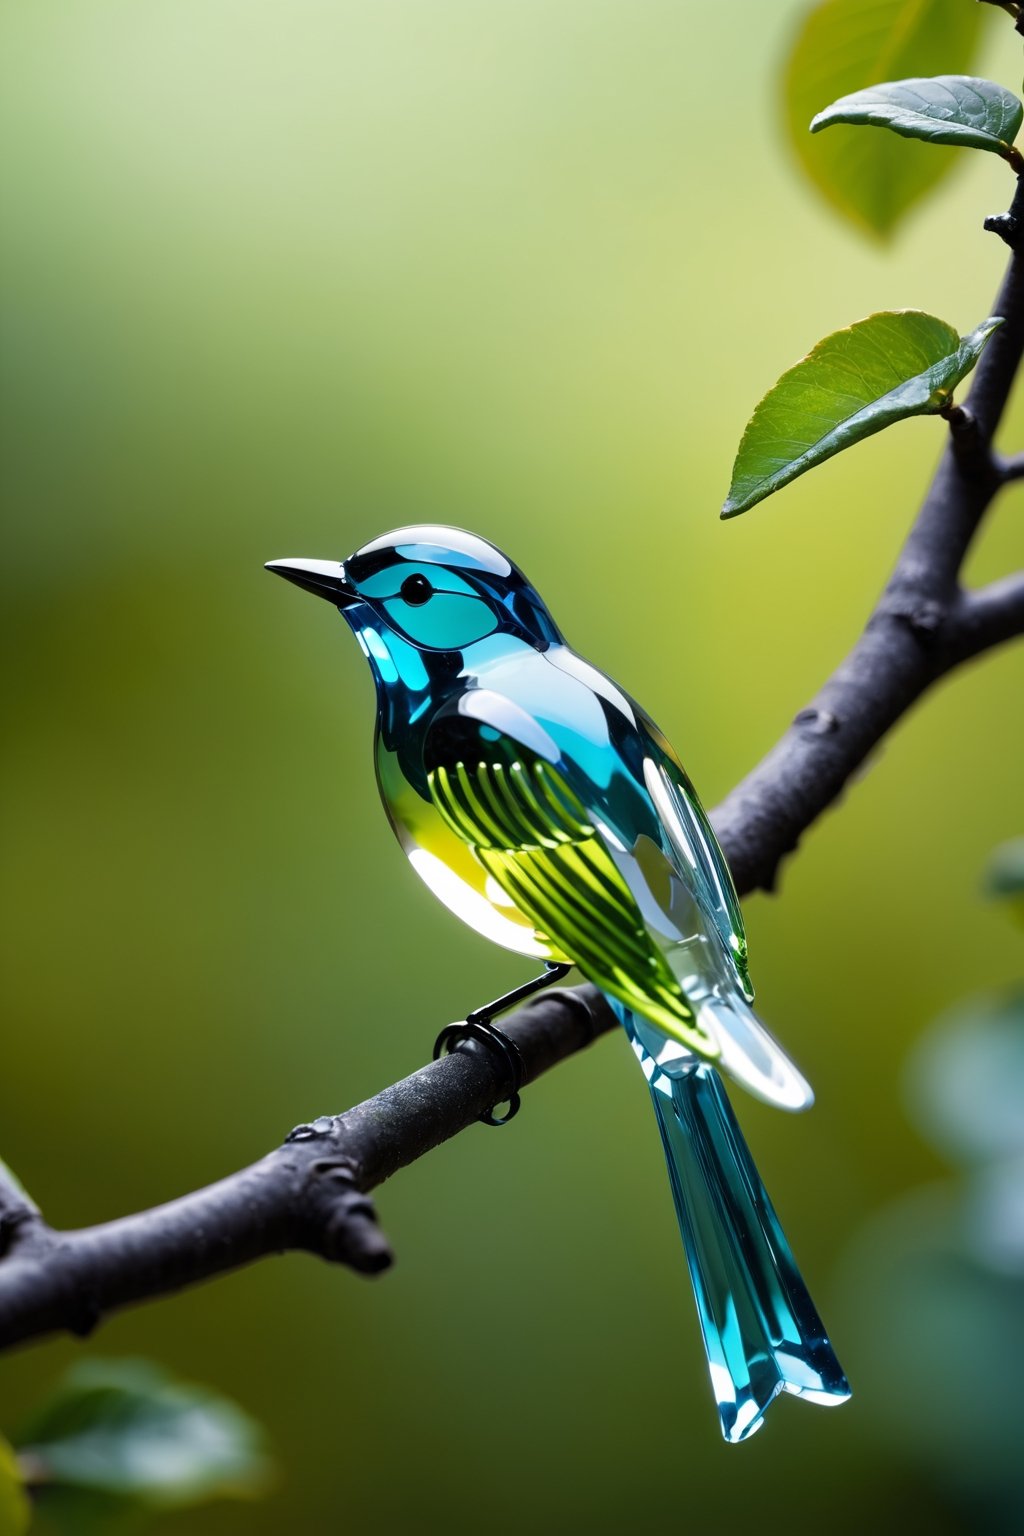 Elegant glass bird perched on a branch, depth of field 